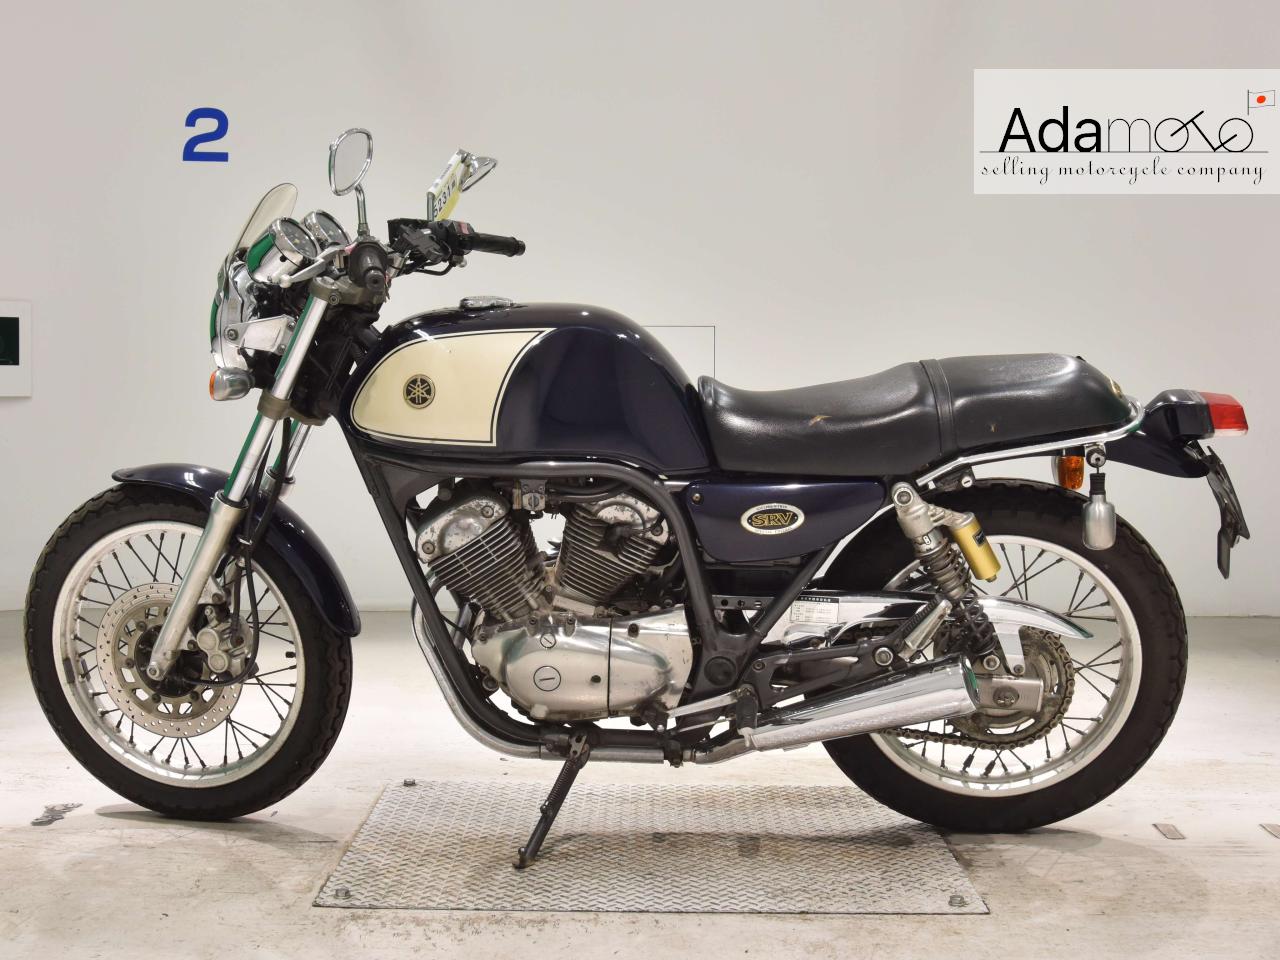 Yamaha SRV250 - Adamoto - Motorcycles from Japan